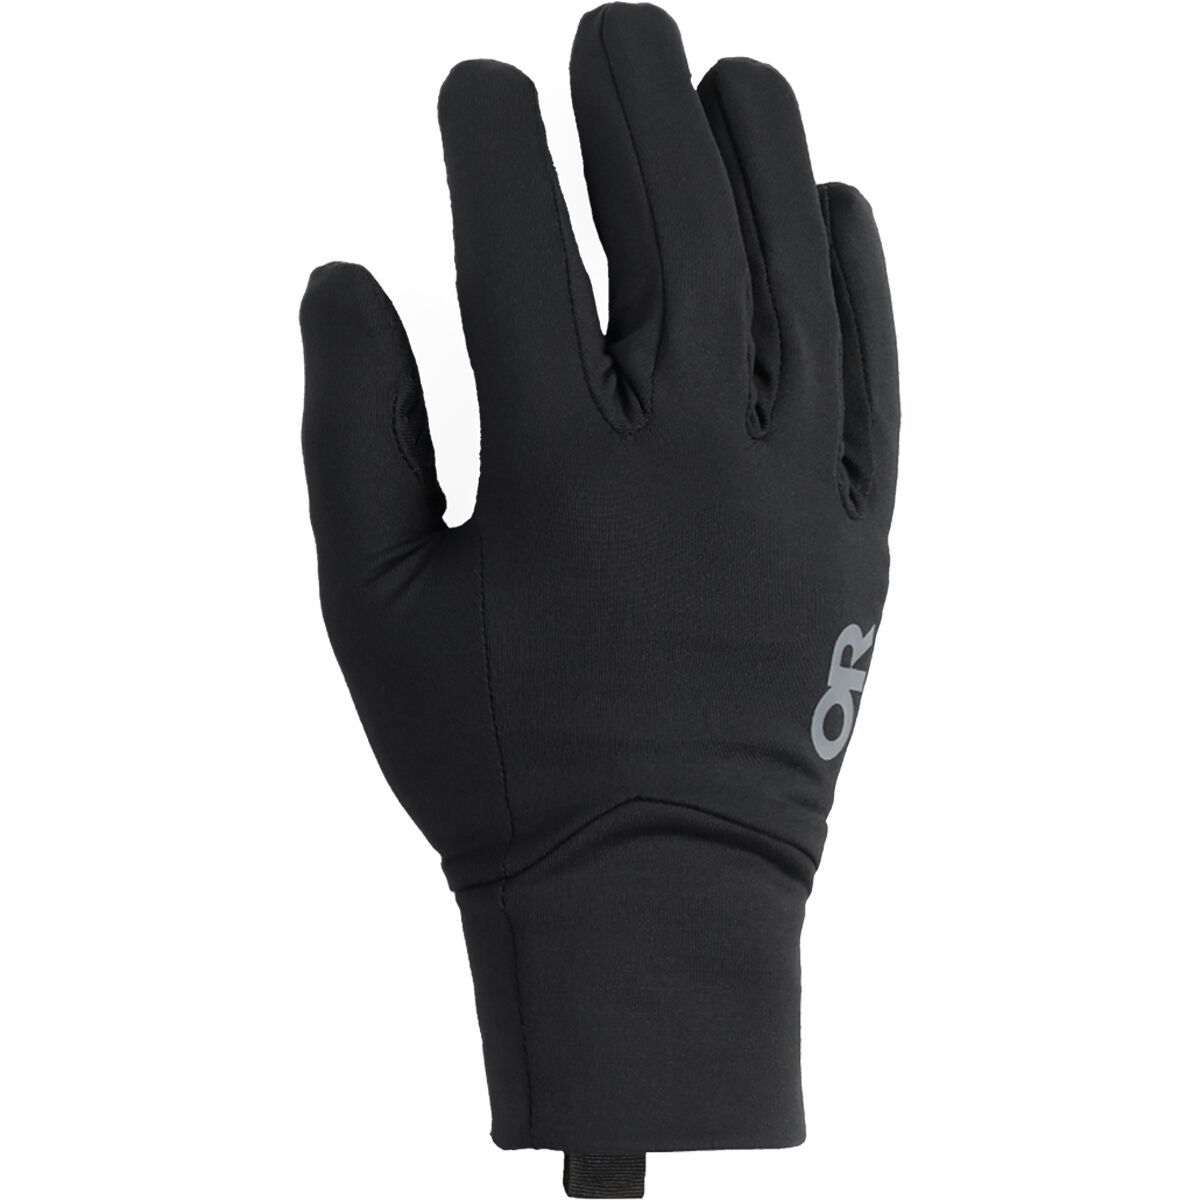 Outdoor Research Vigor Lightweight Sensor Glove - Men's Black